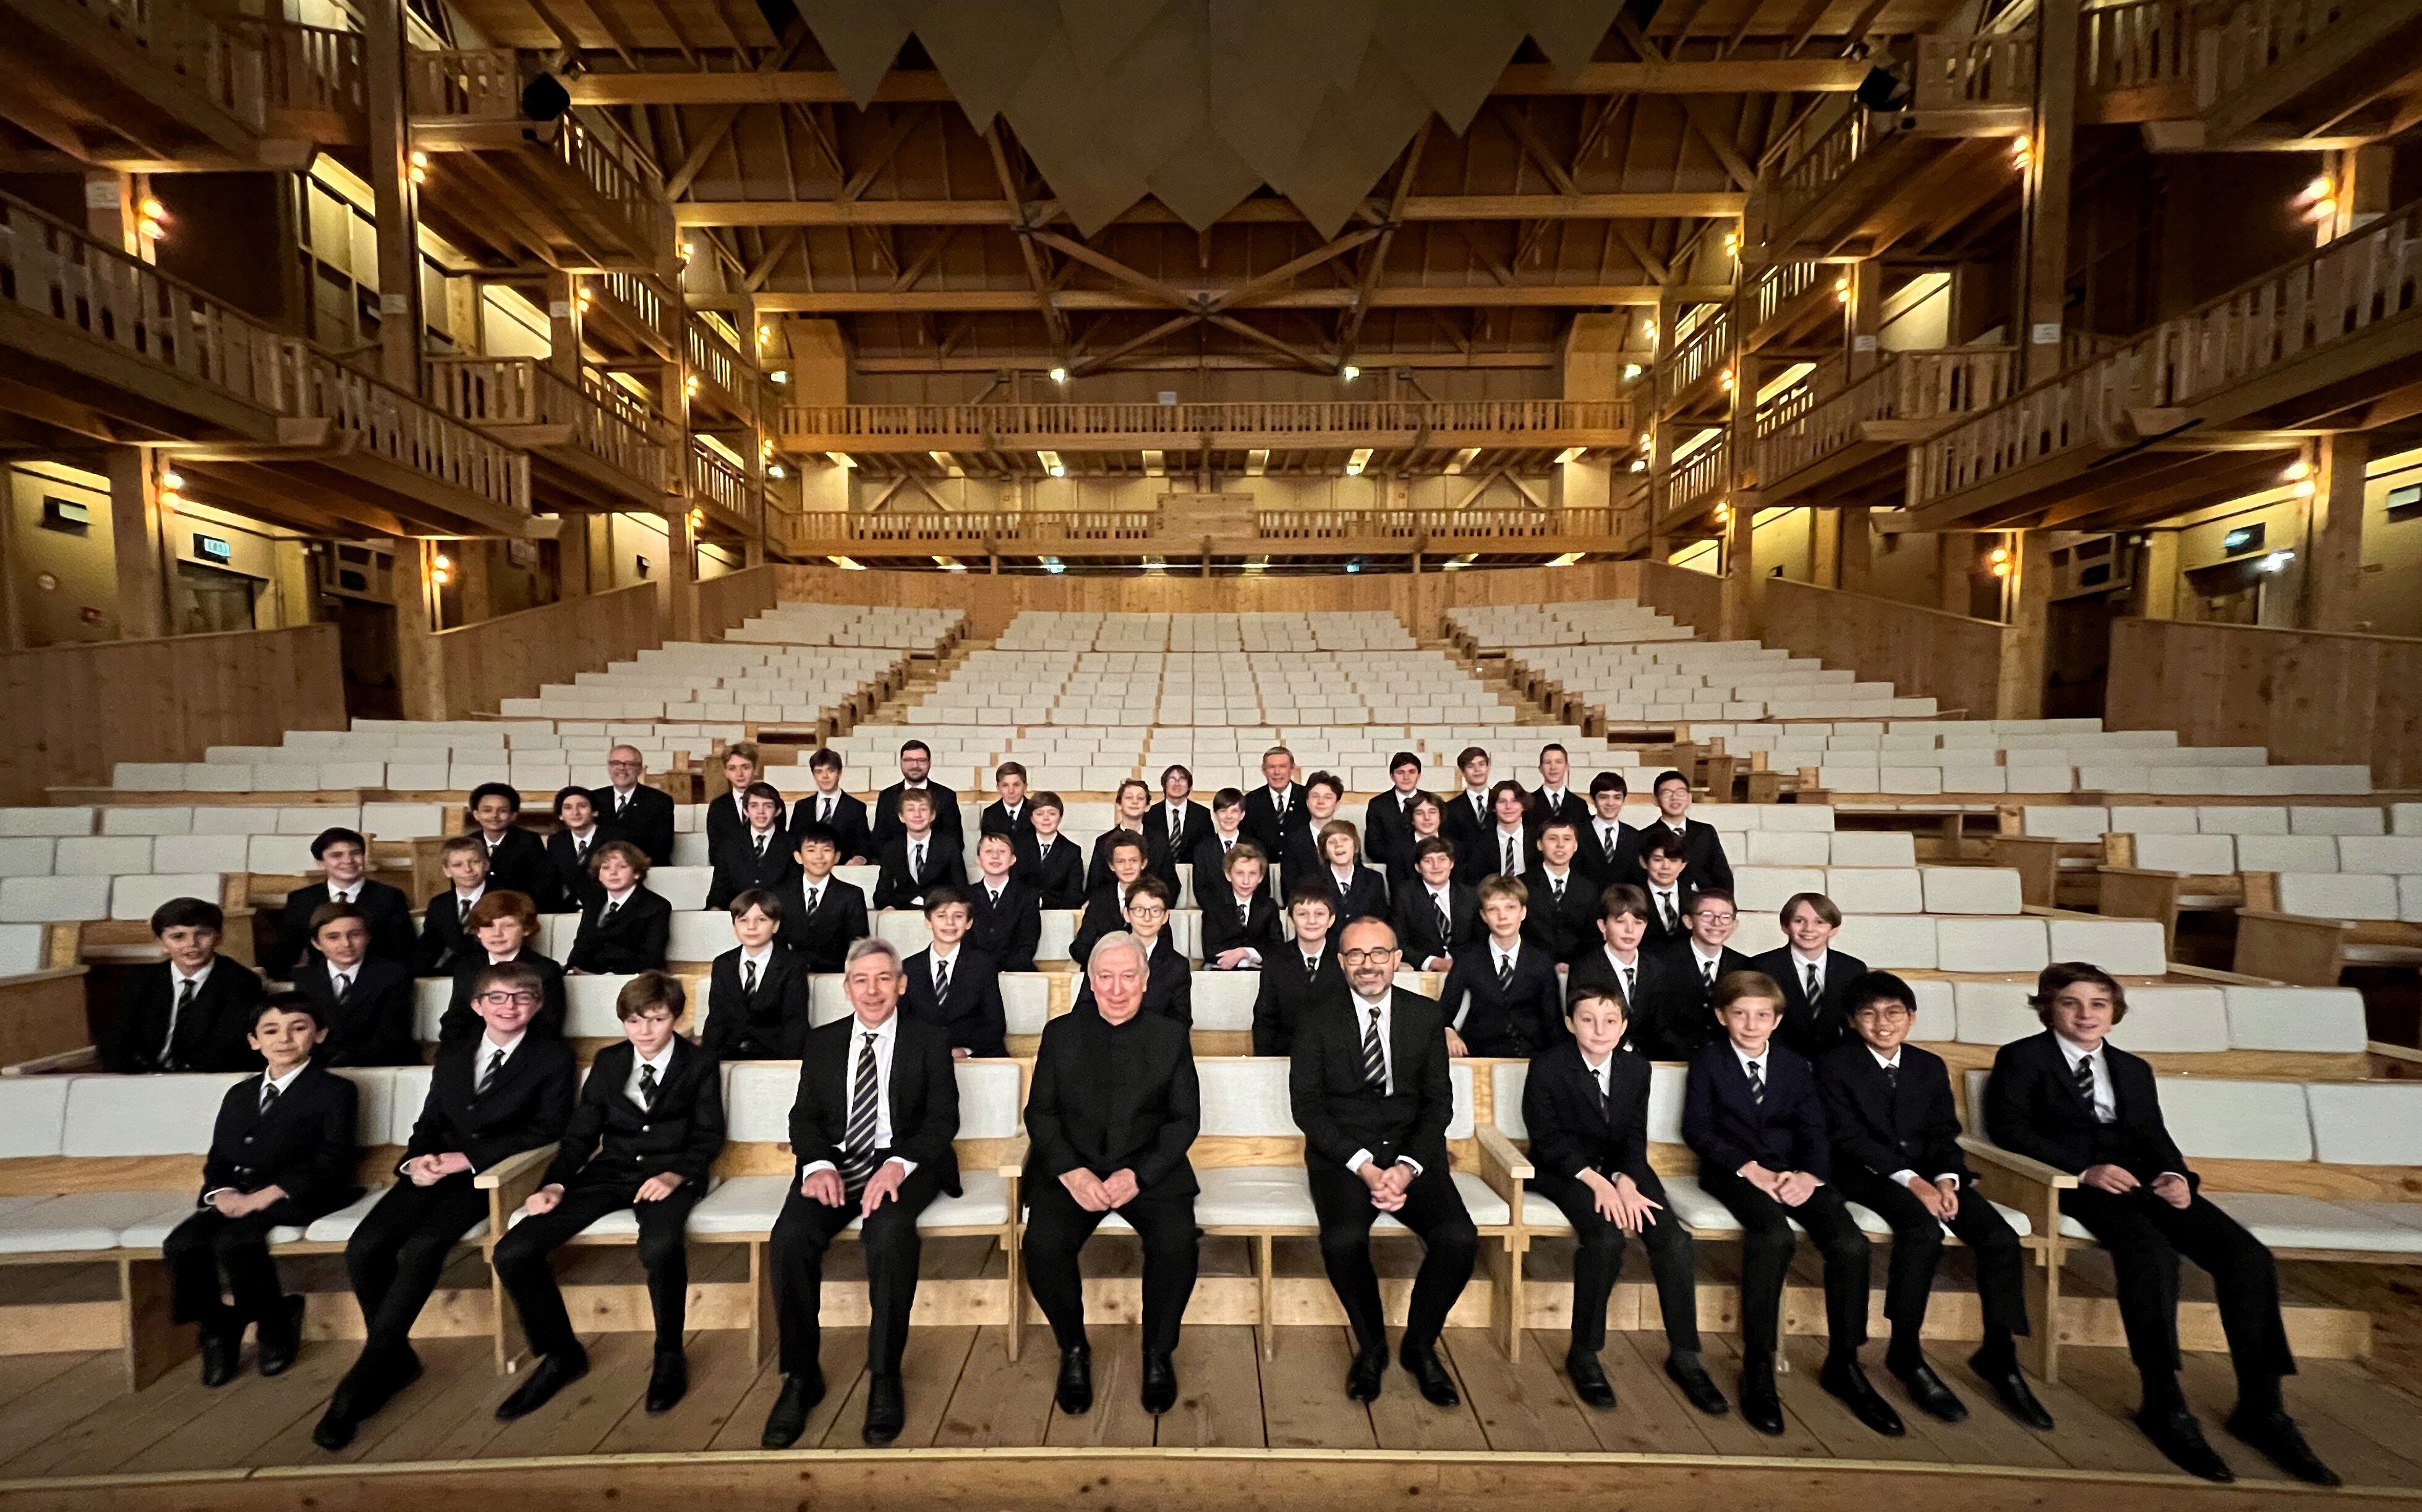 The Paris Boys Choir